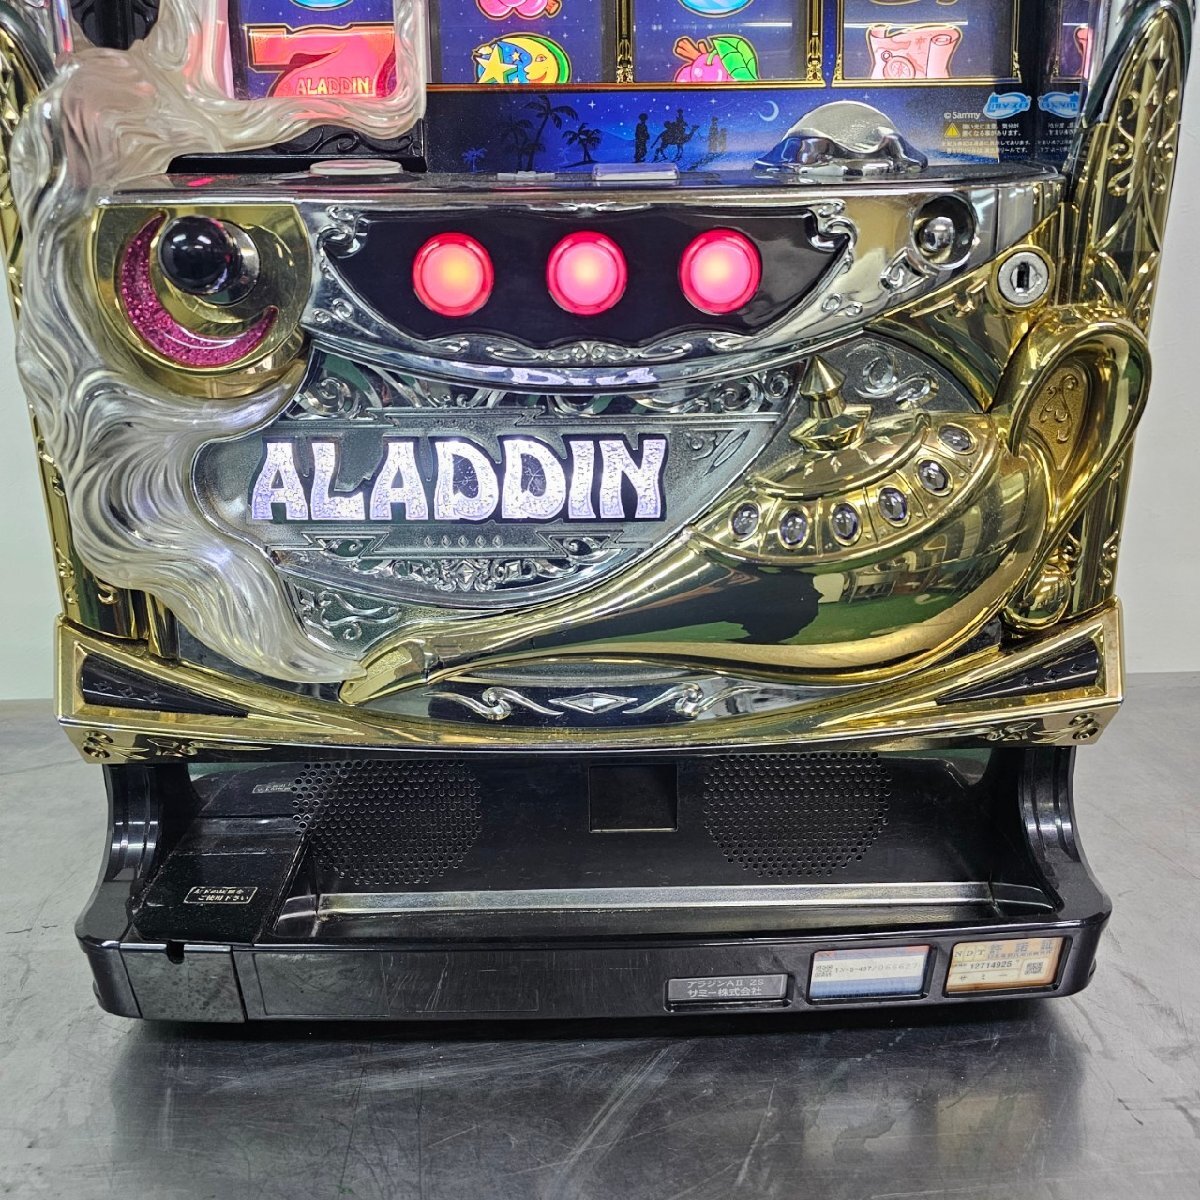  slot machine slot apparatus [ Aladdin A II]sami- coin un- necessary home use power supply operation verification settled /C4142